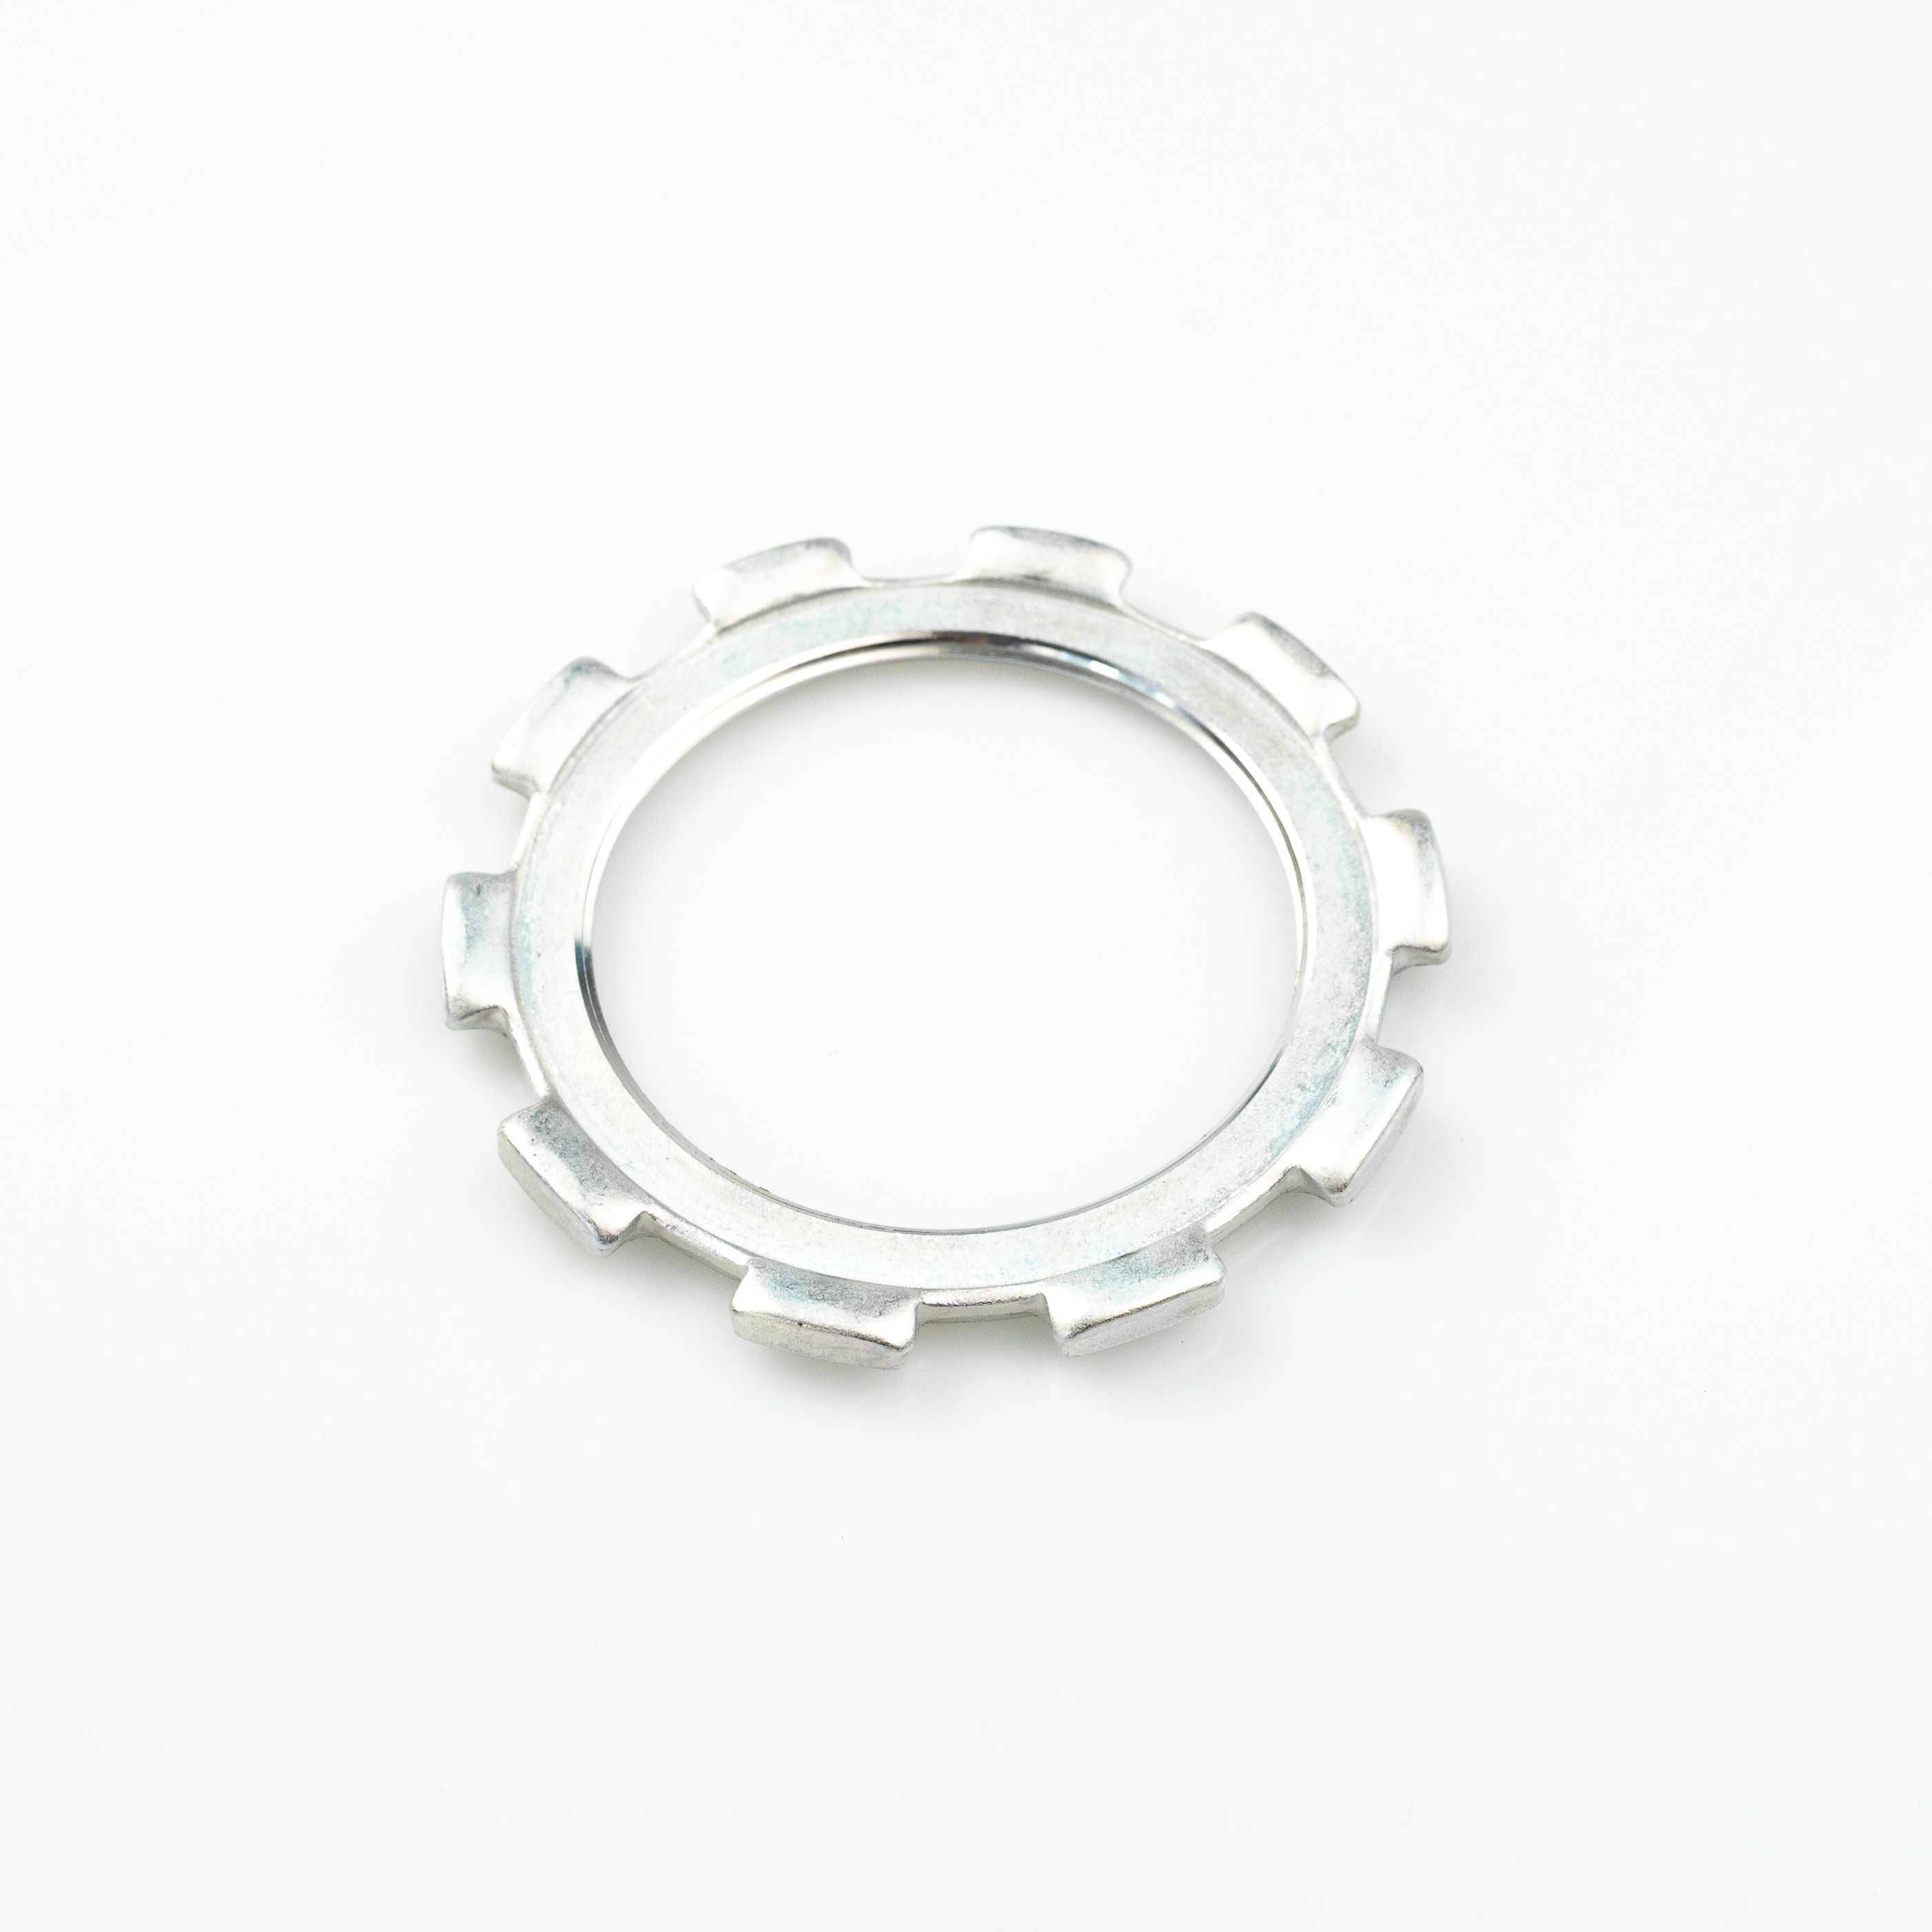 Obrázek produktu Nut for spring RCU KYB 120164600101 46mm top steel